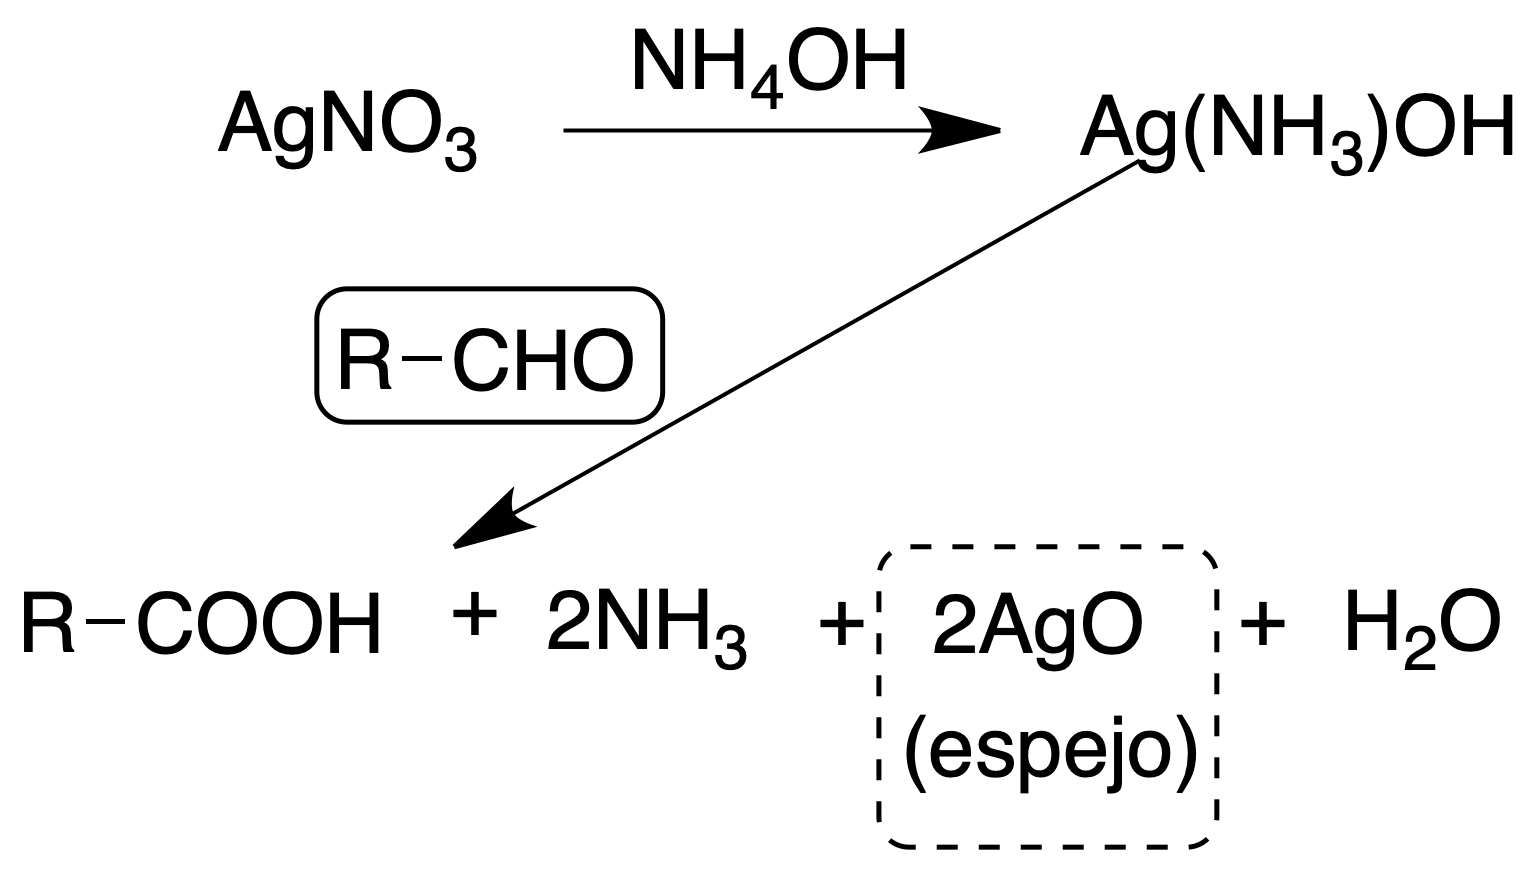 Tollens reagent analysis aldehydes ketones.